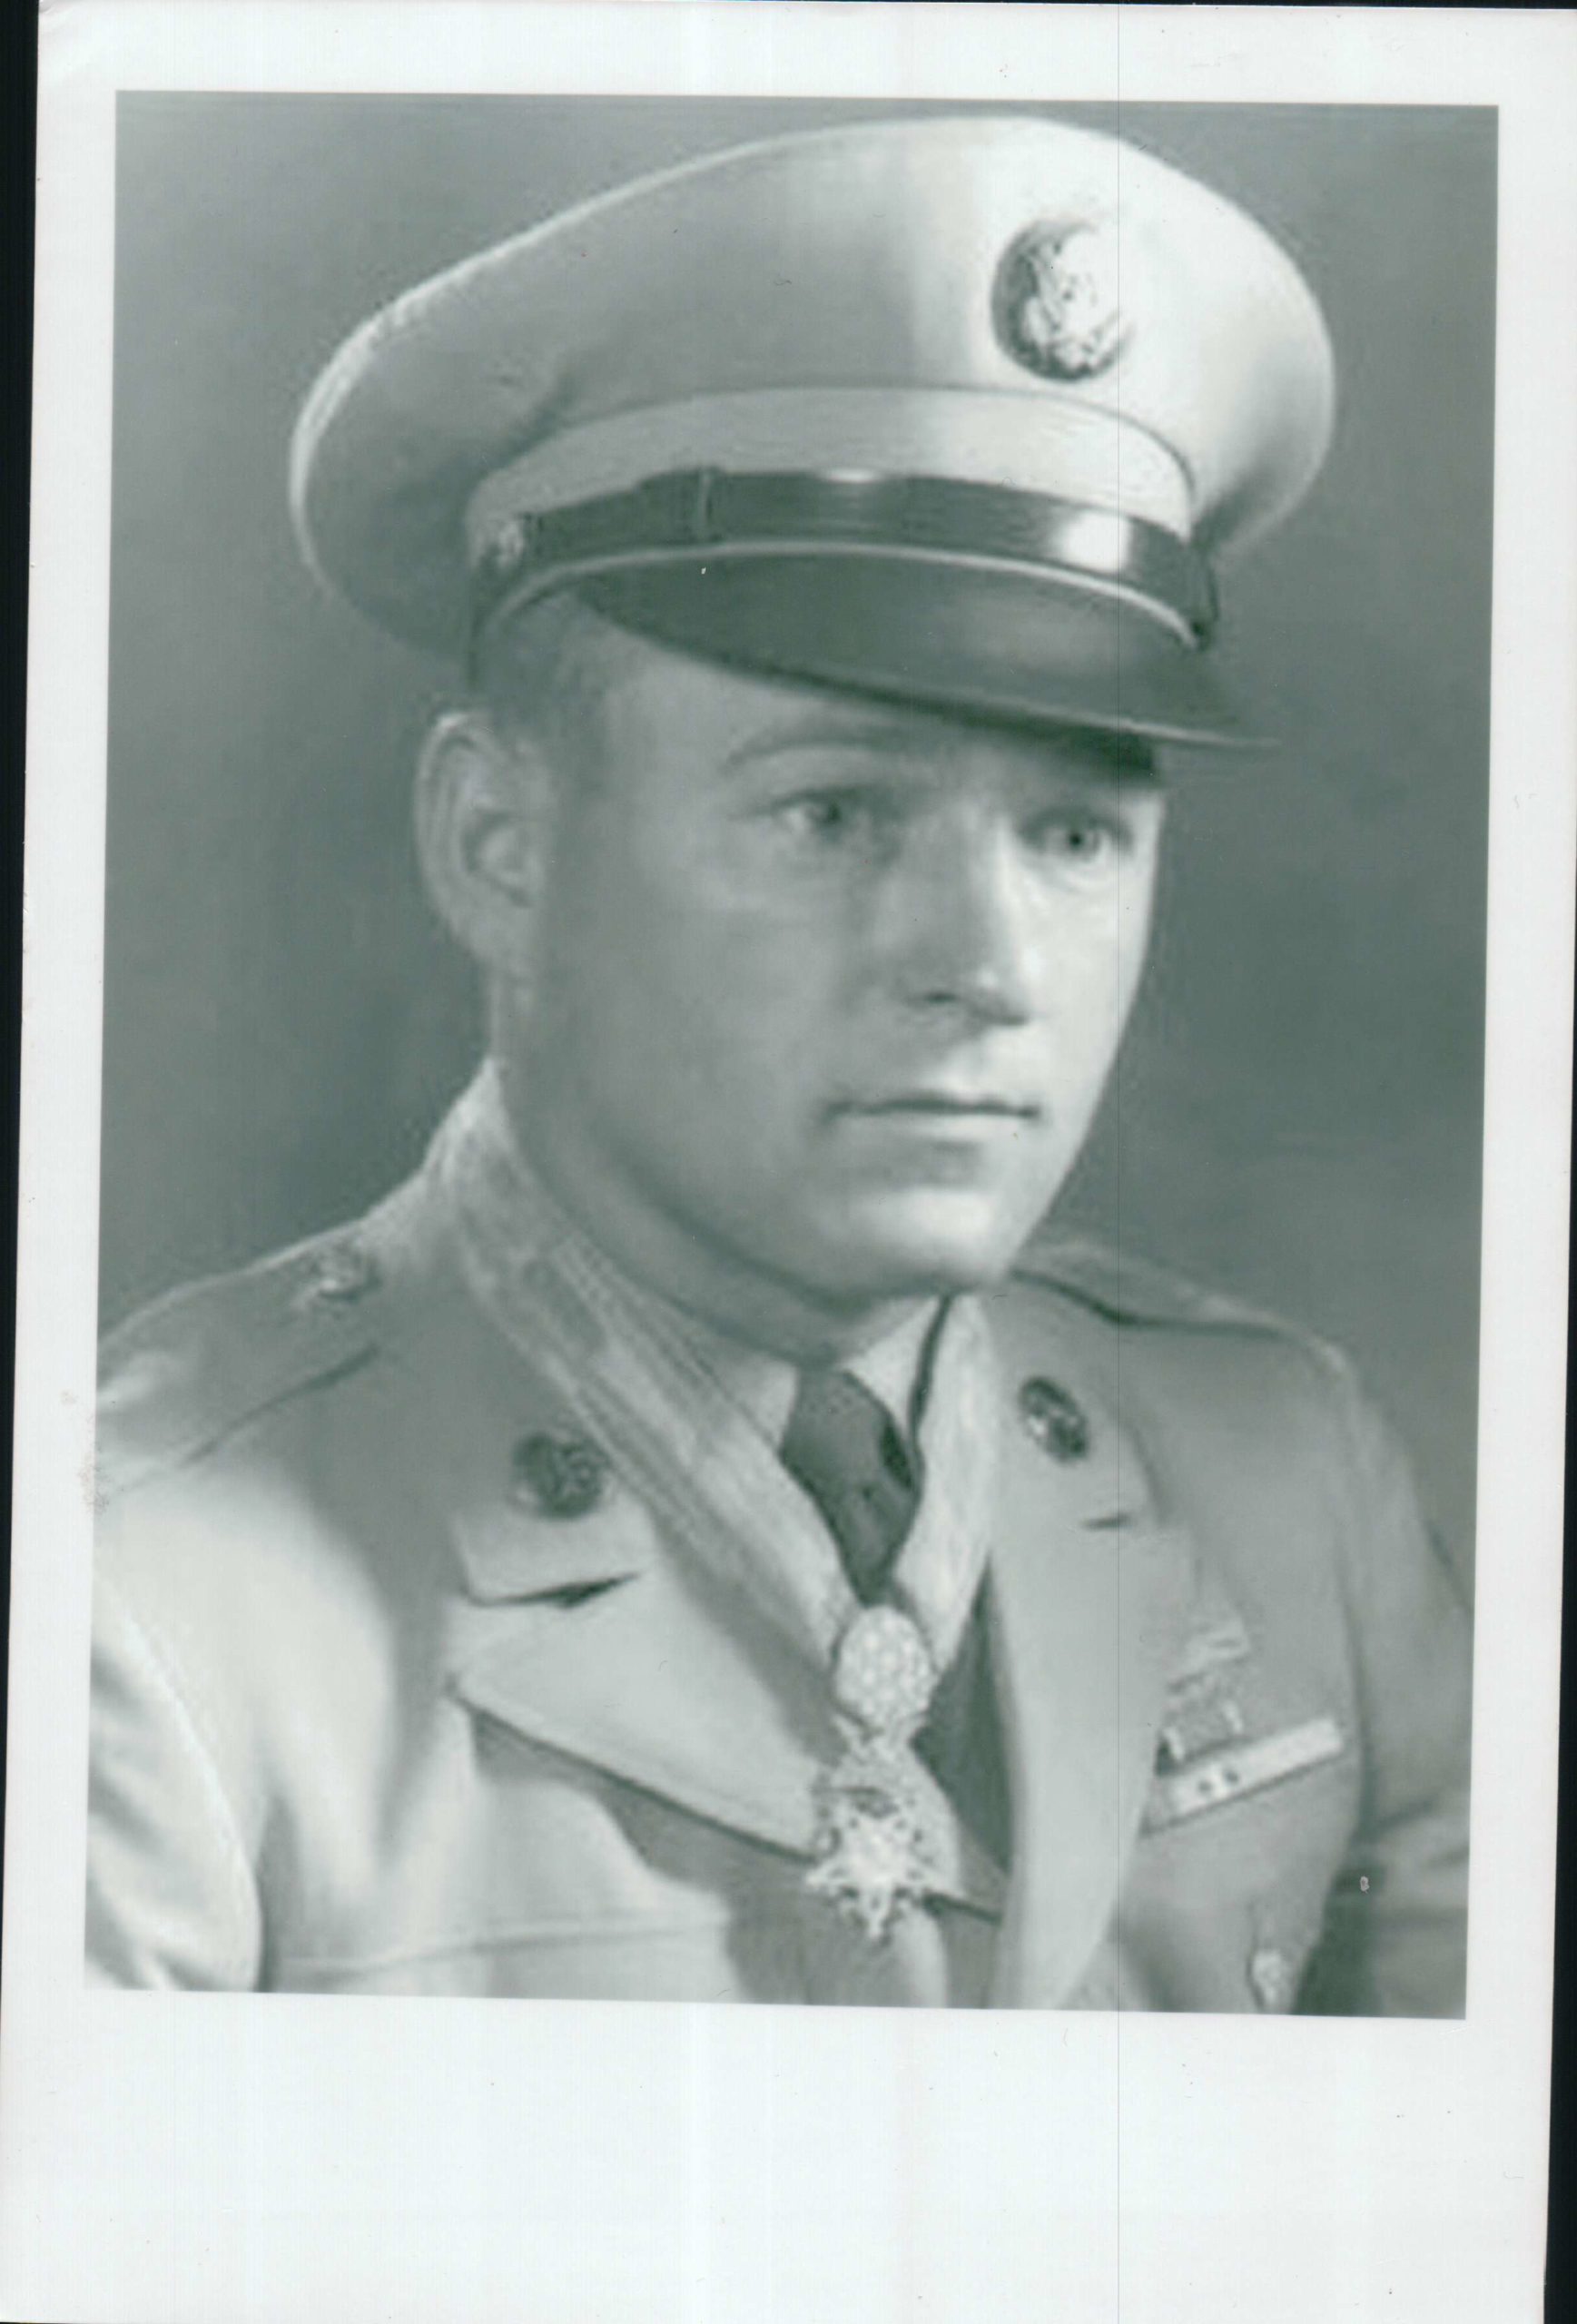 Ronald Rosser wearing the Medal of Honor. Taken in 1952.